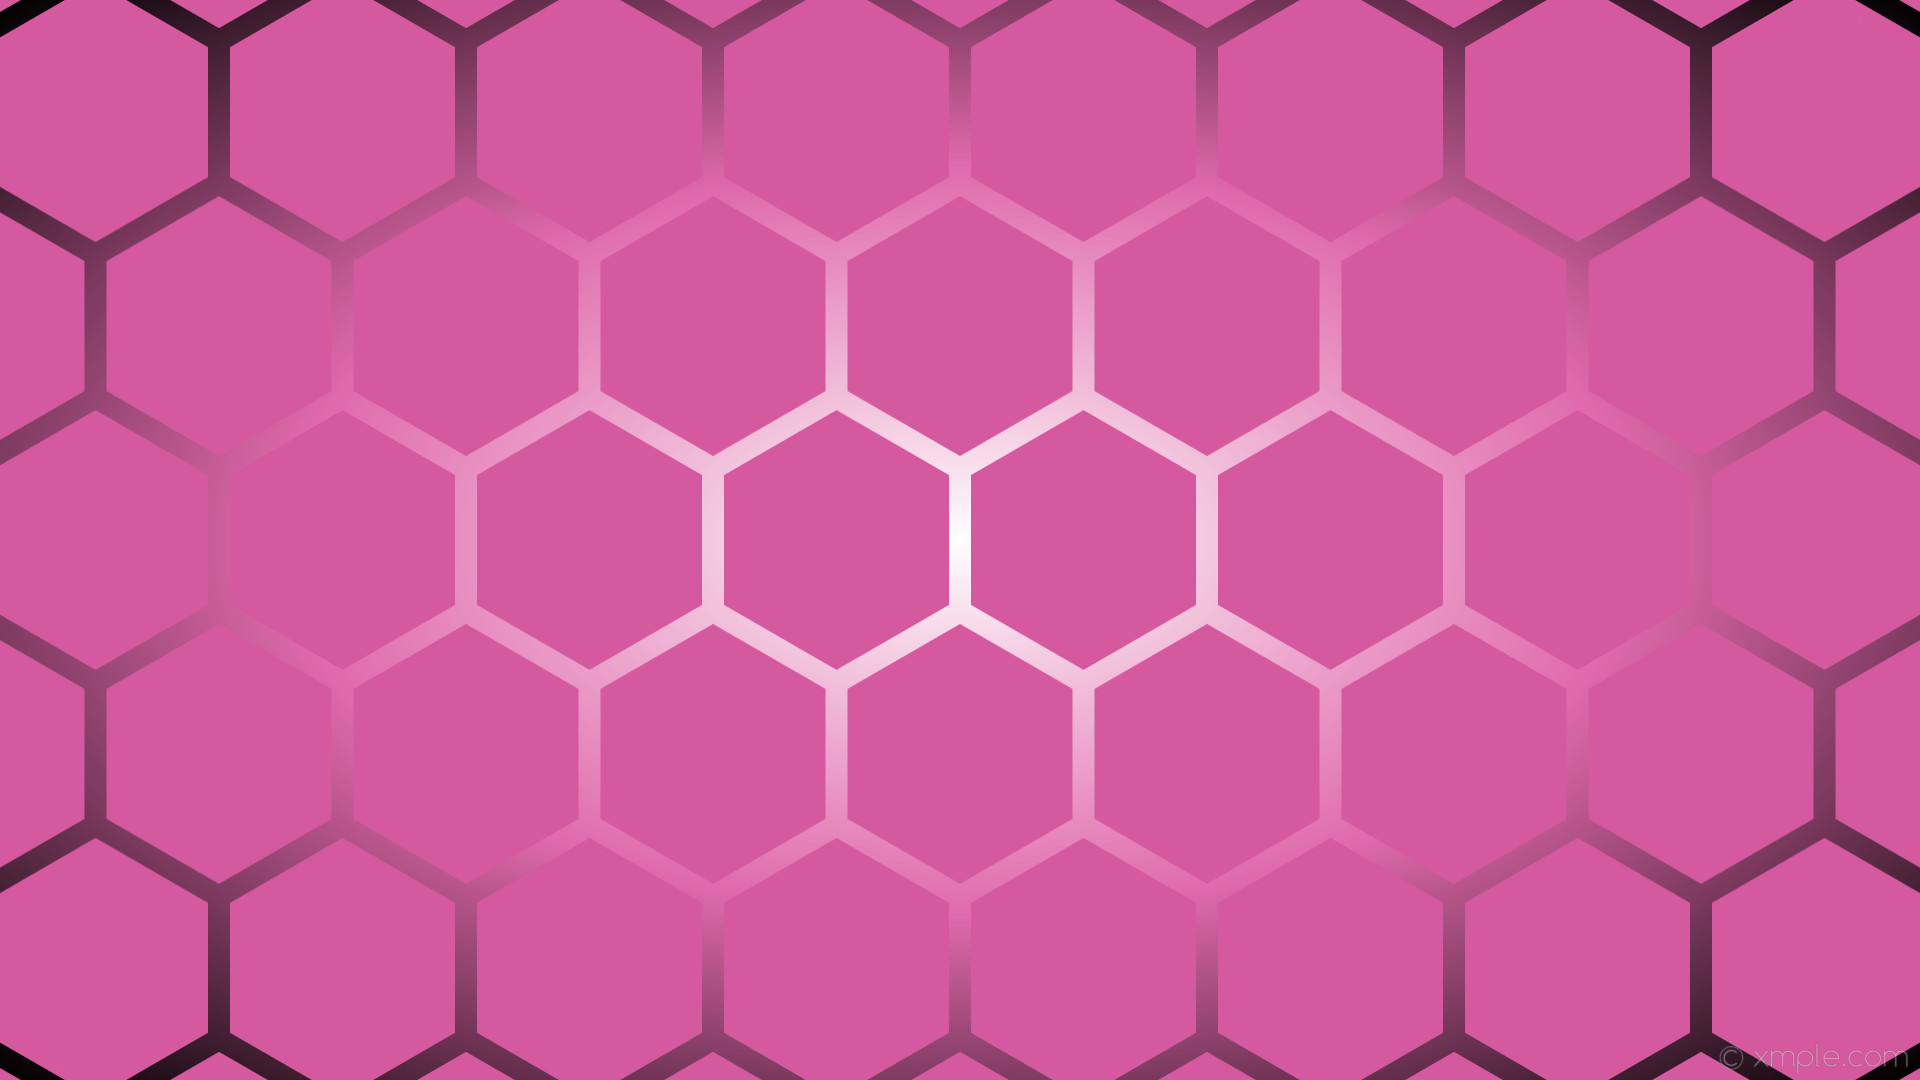 1920x1080 wallpaper hexagon glow gradient white black pink #d5599f #ffffff #df69ab 0Â°  22px